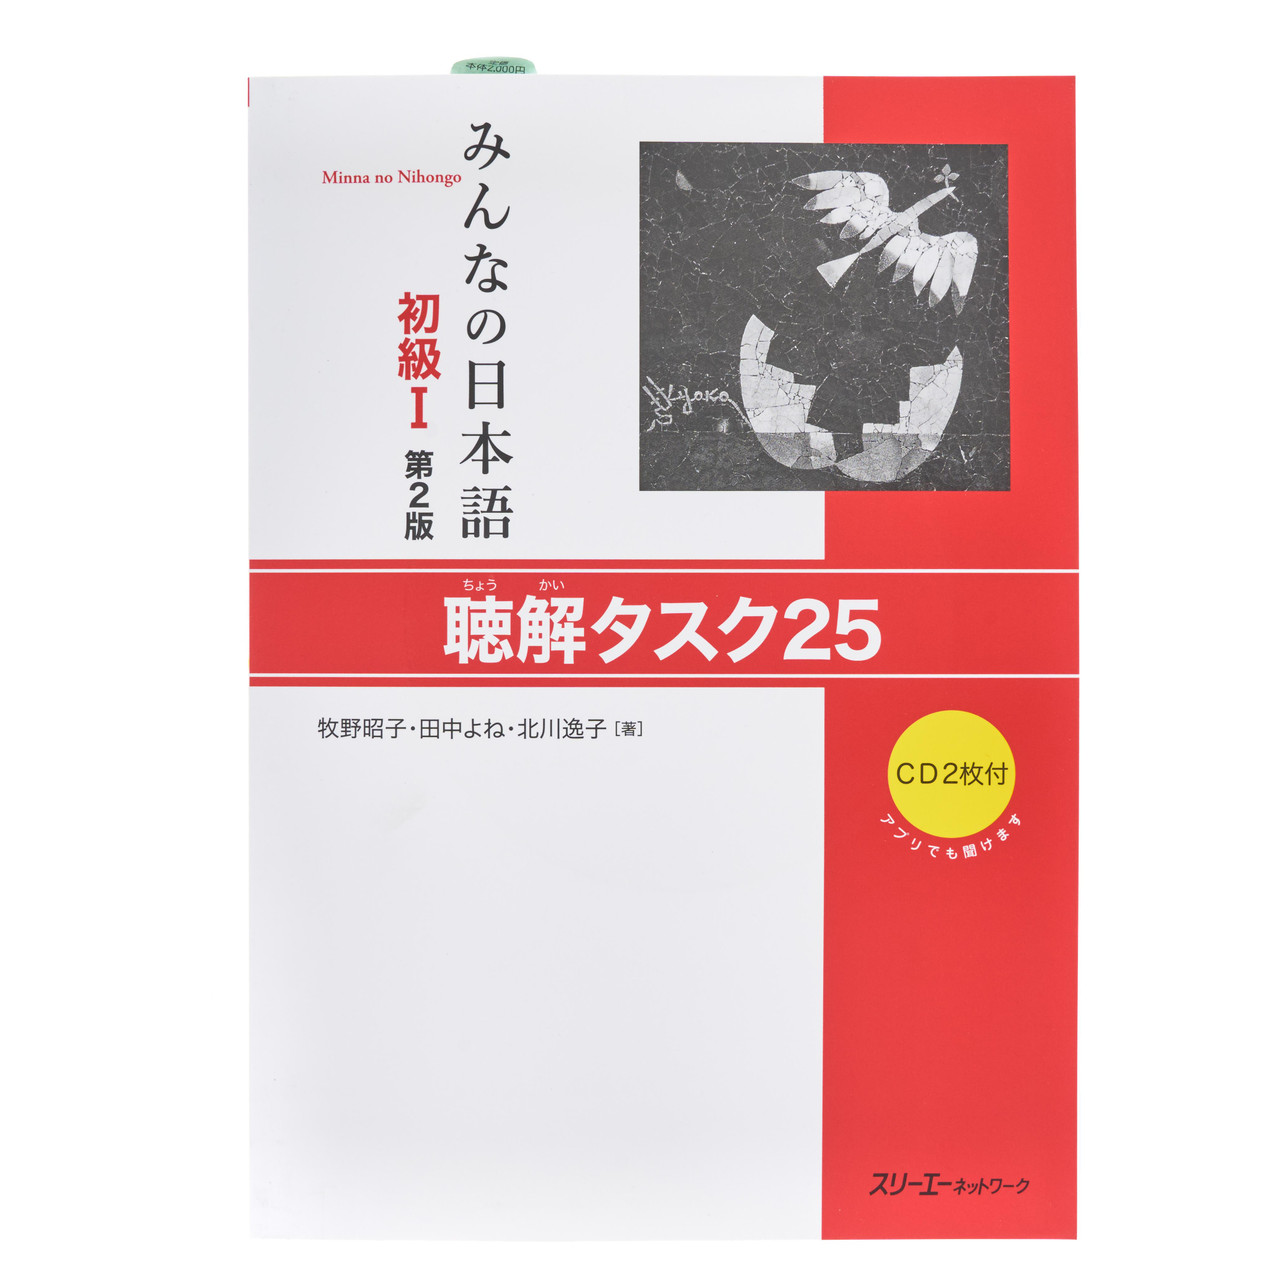 Minna no Nihongo I 2nd Edition Listening Tasks 25 Workbook with CD g  ジャパンセンター